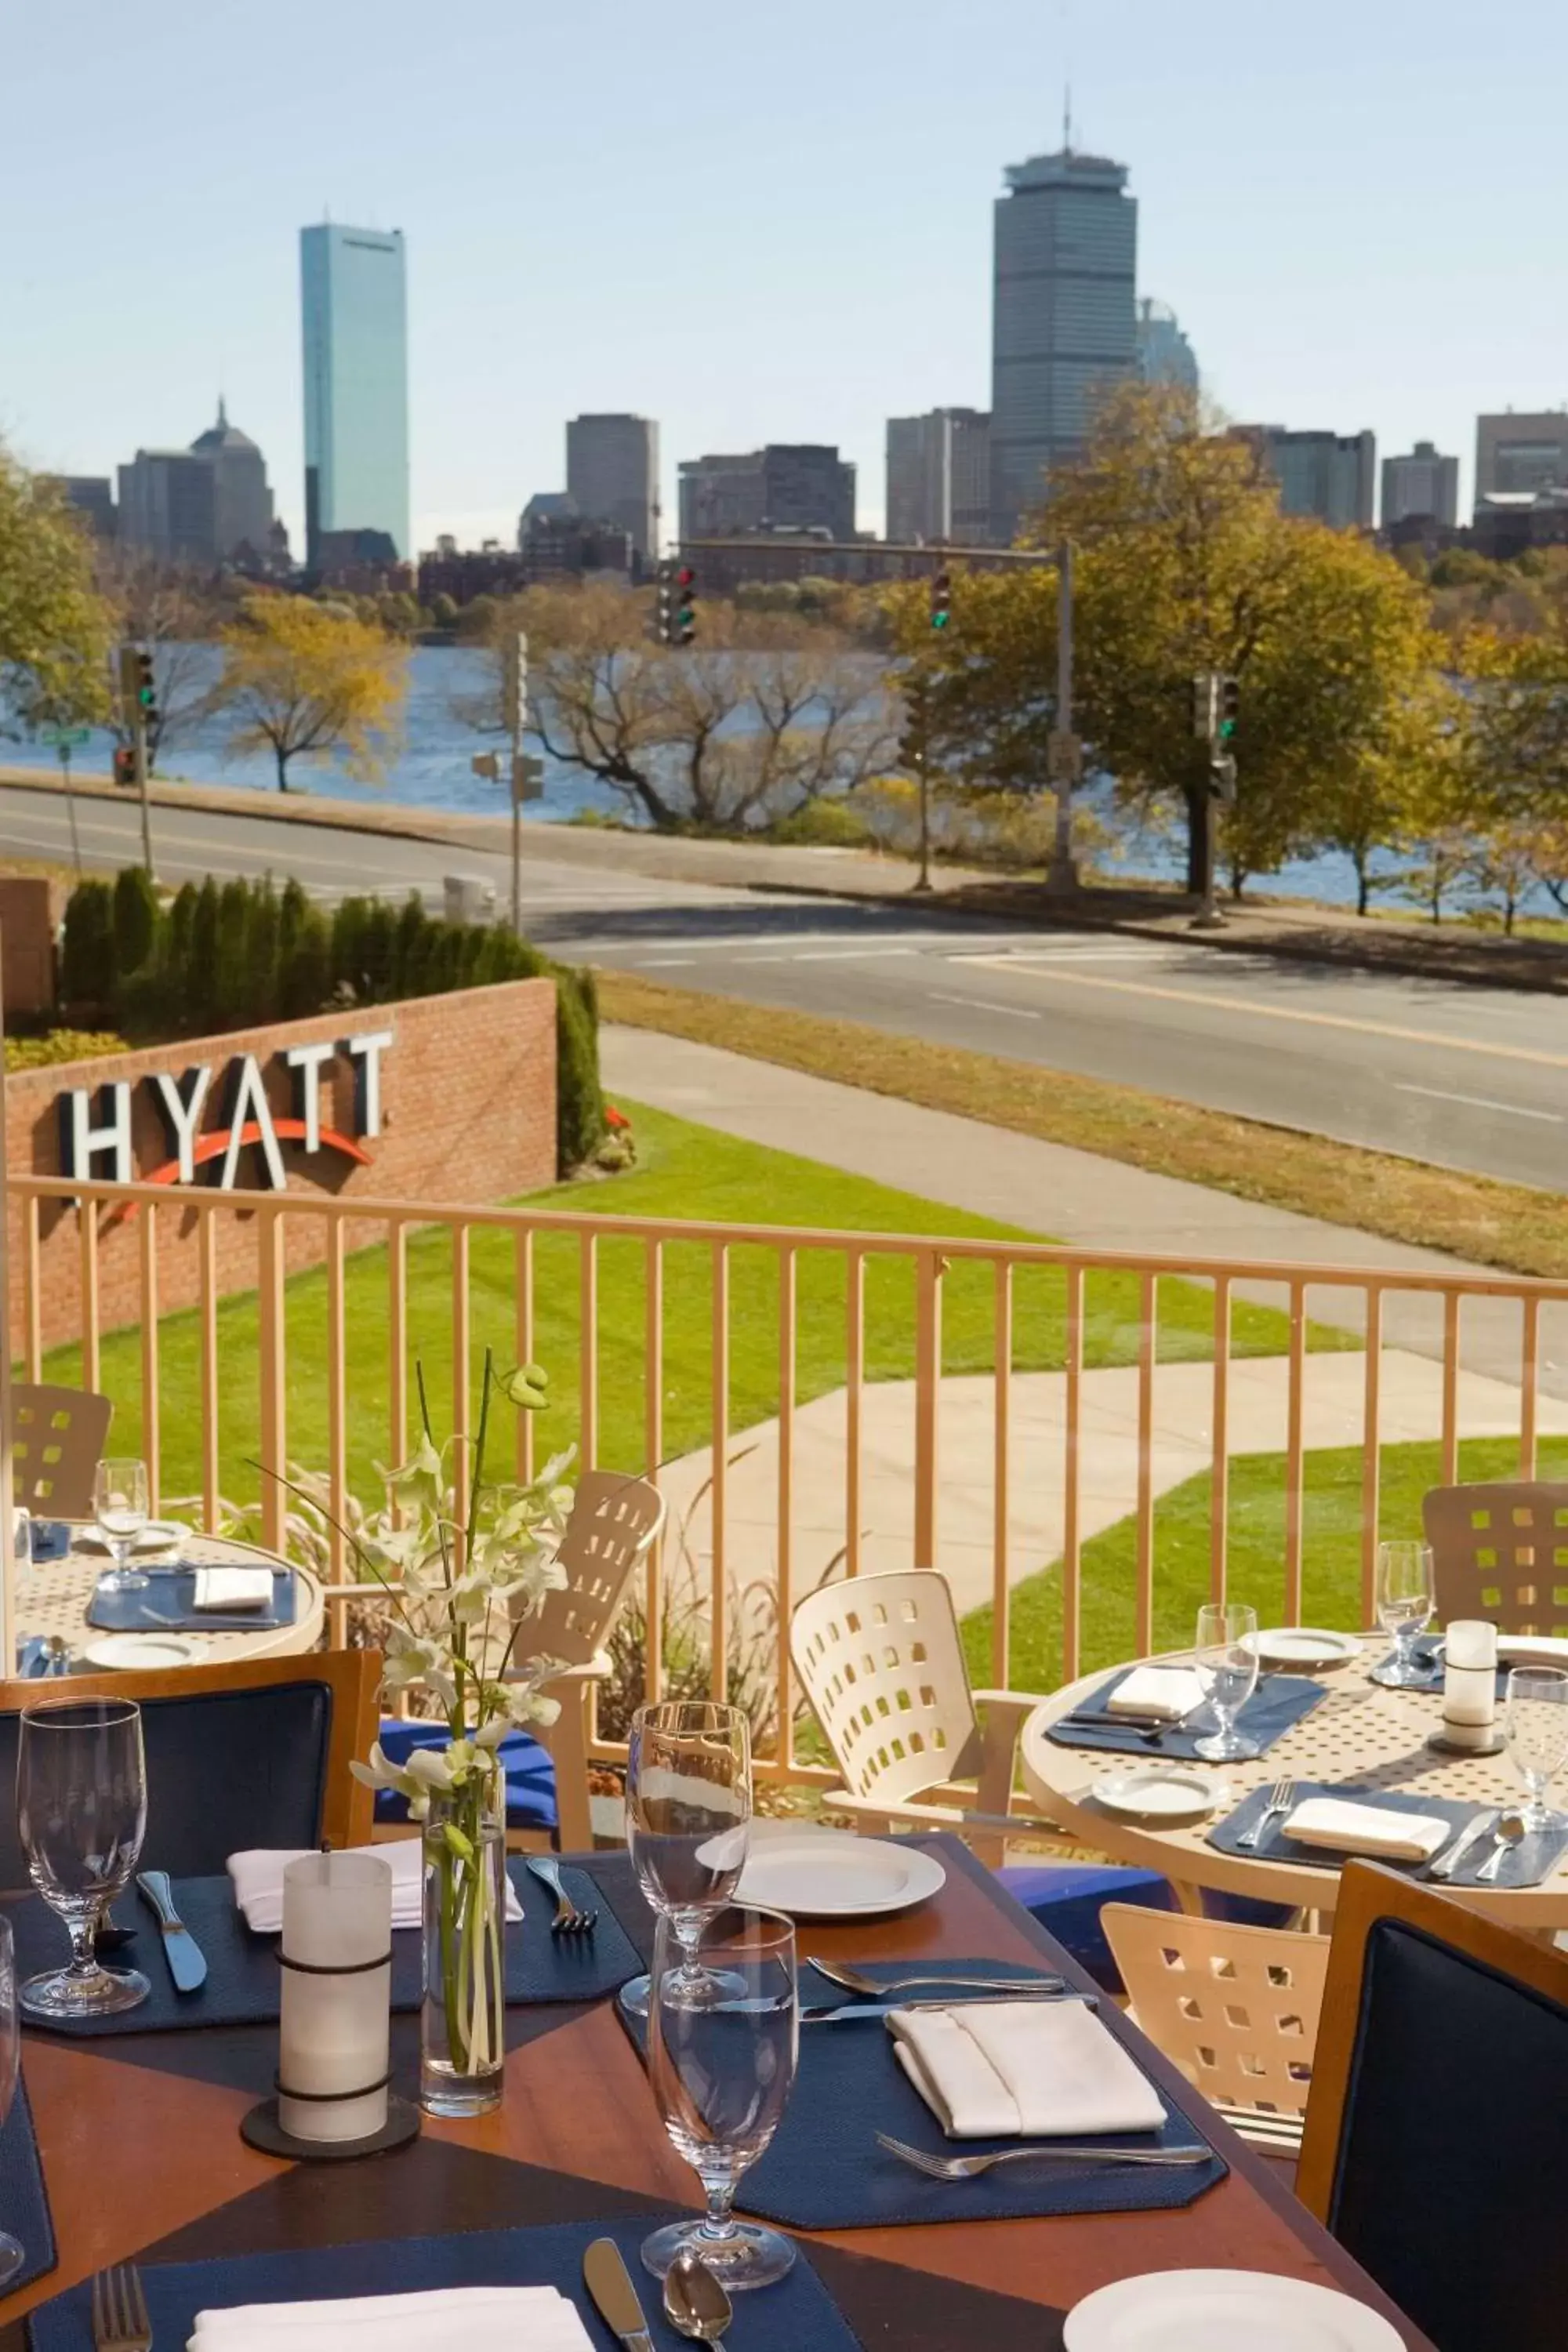 Restaurant/places to eat in Hyatt Regency Boston/Cambridge